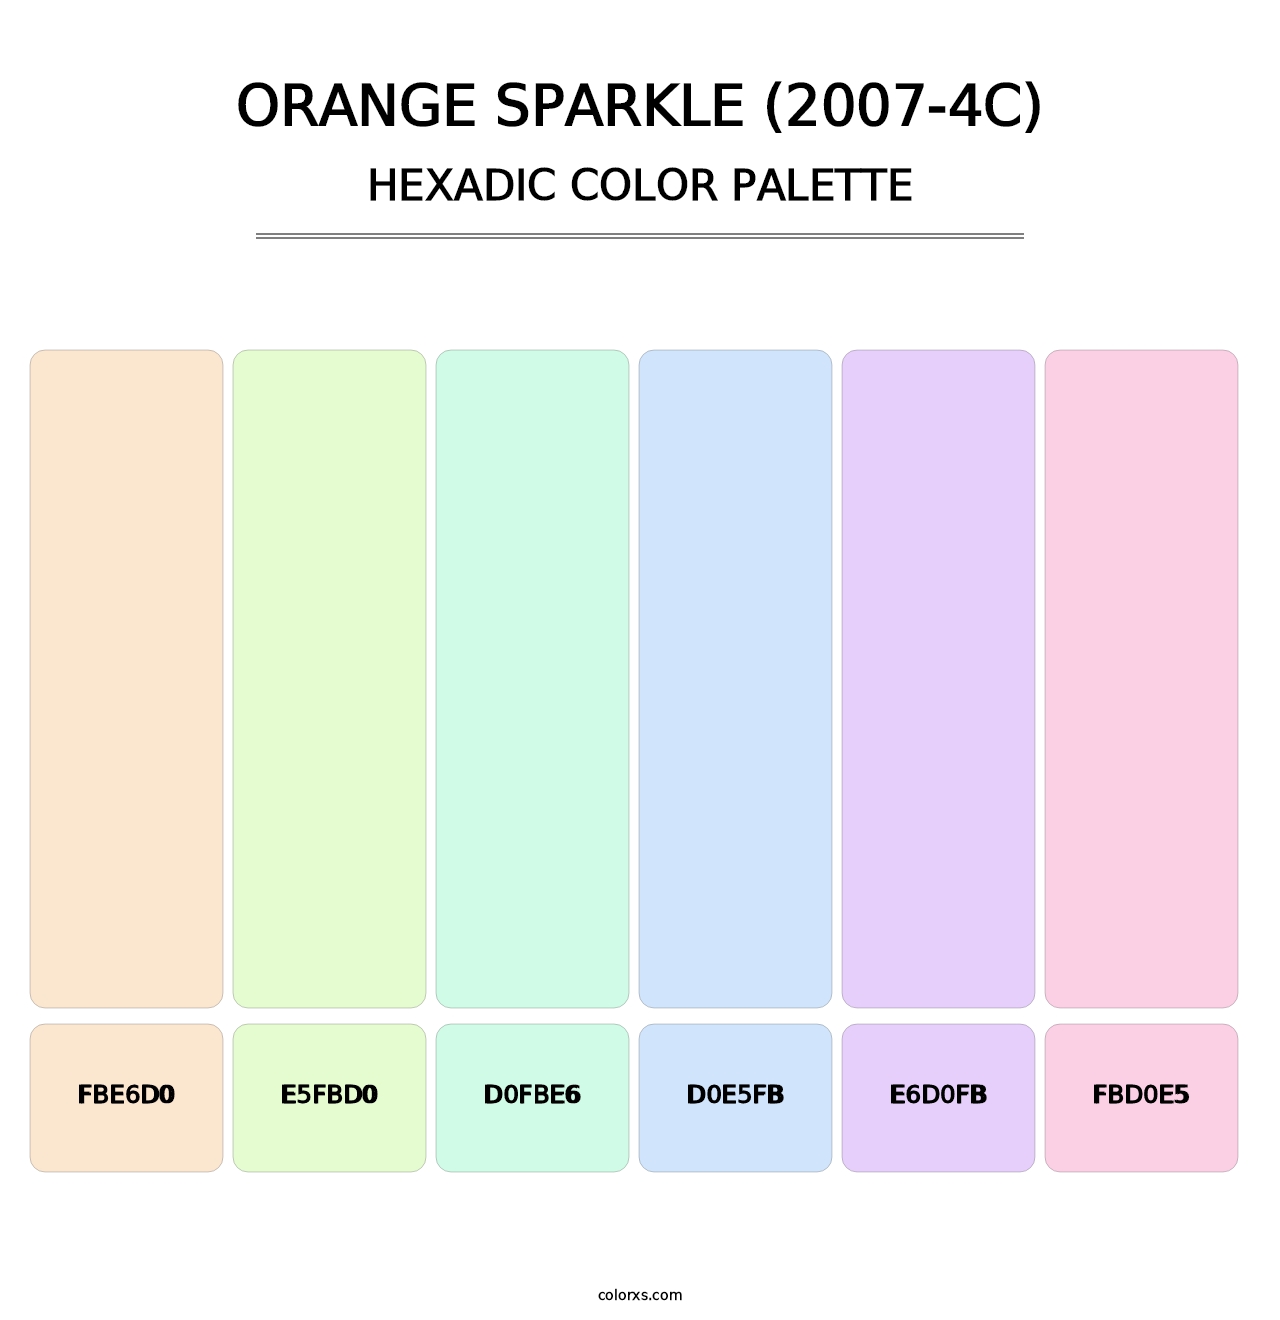 Orange Sparkle (2007-4C) - Hexadic Color Palette